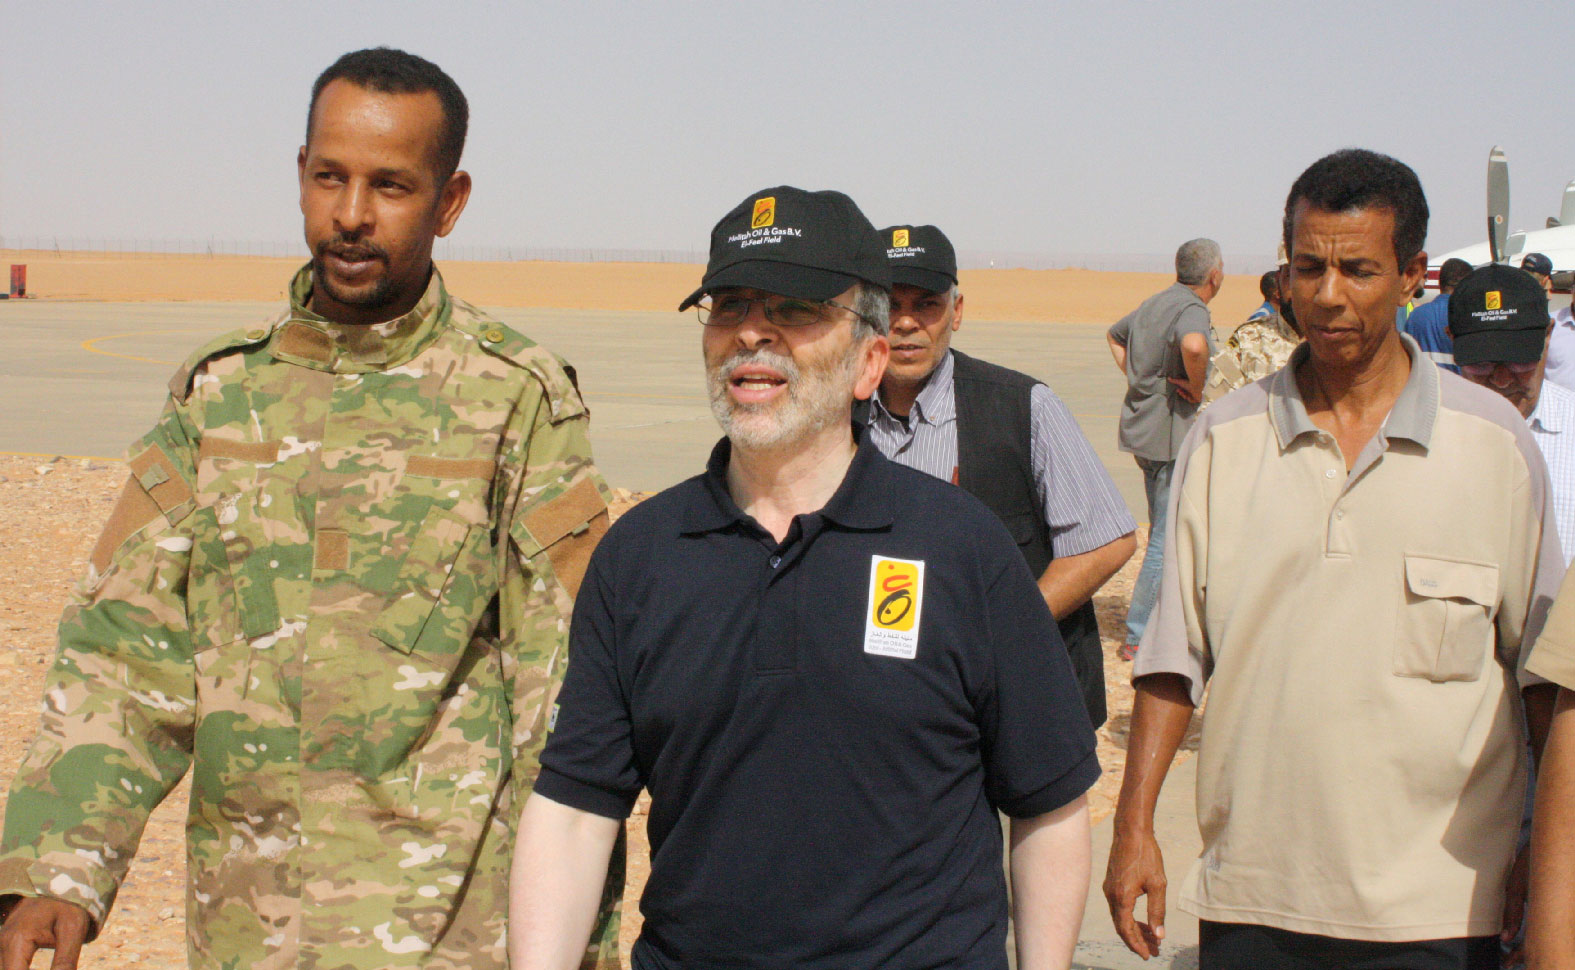 Mustafa Sanalla, chairman of Libya's National Oil Corporation, arrives at Sharara oil field near Ubari, Libya, July 6, 2017. 